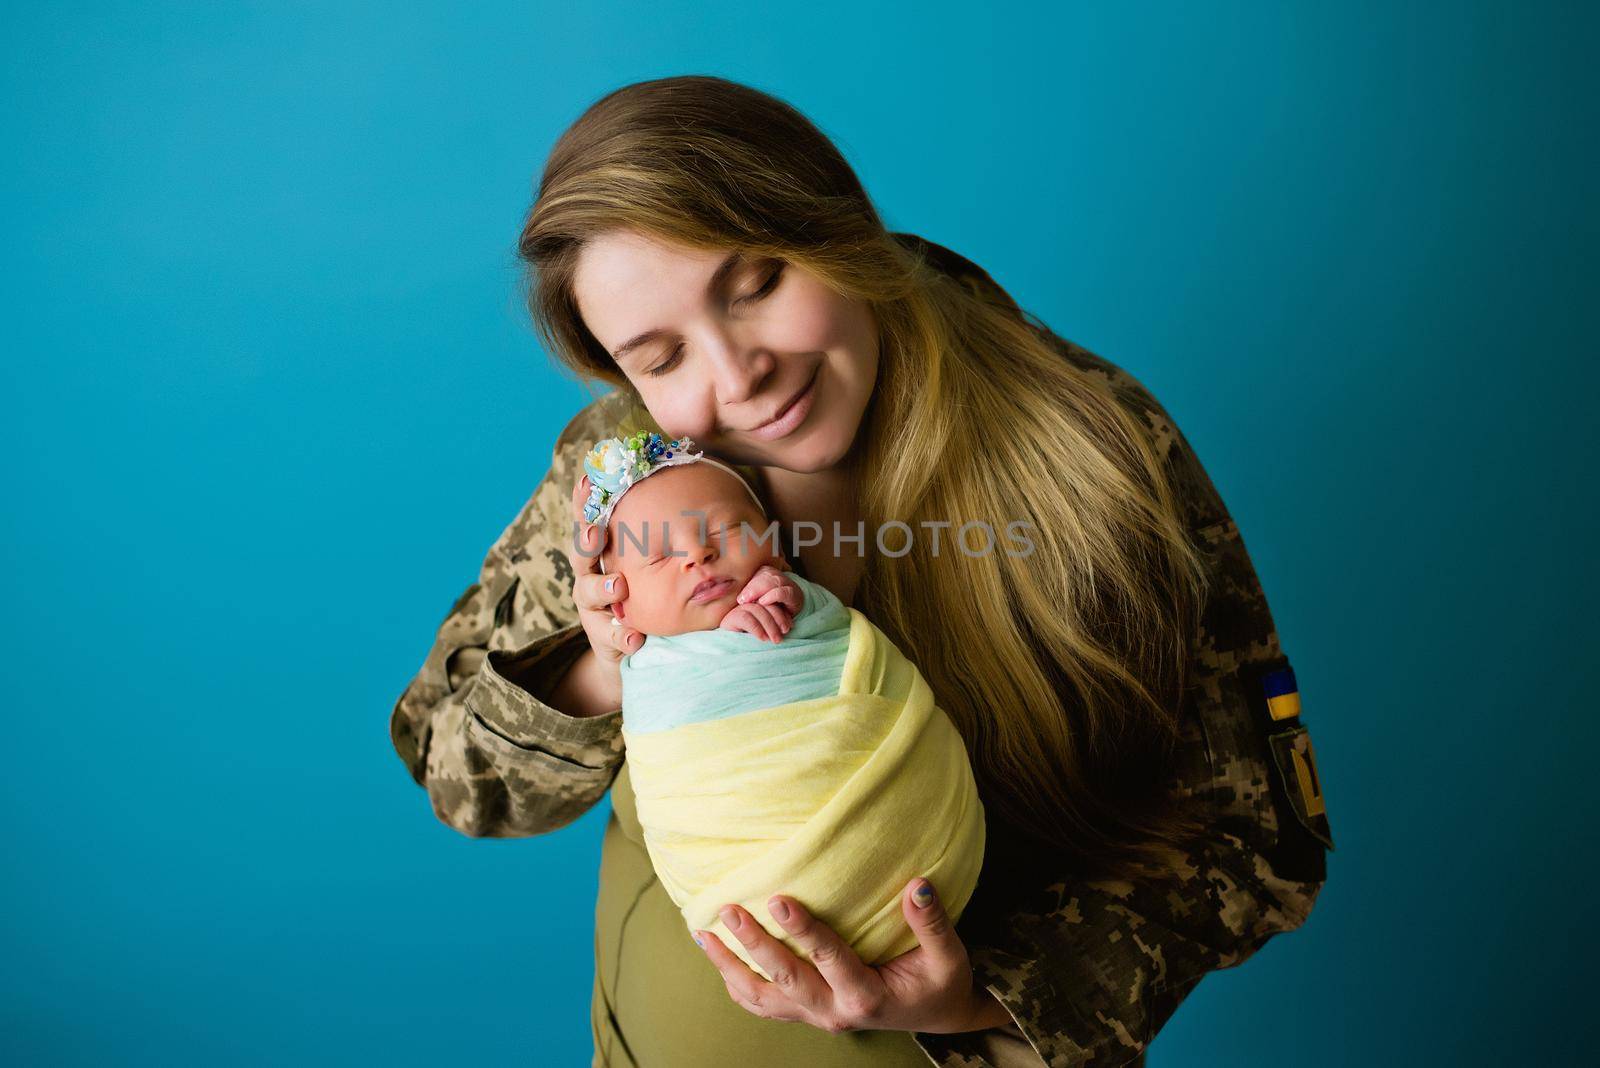 Ukrainian military woman with baby by OksanaFedorchuk